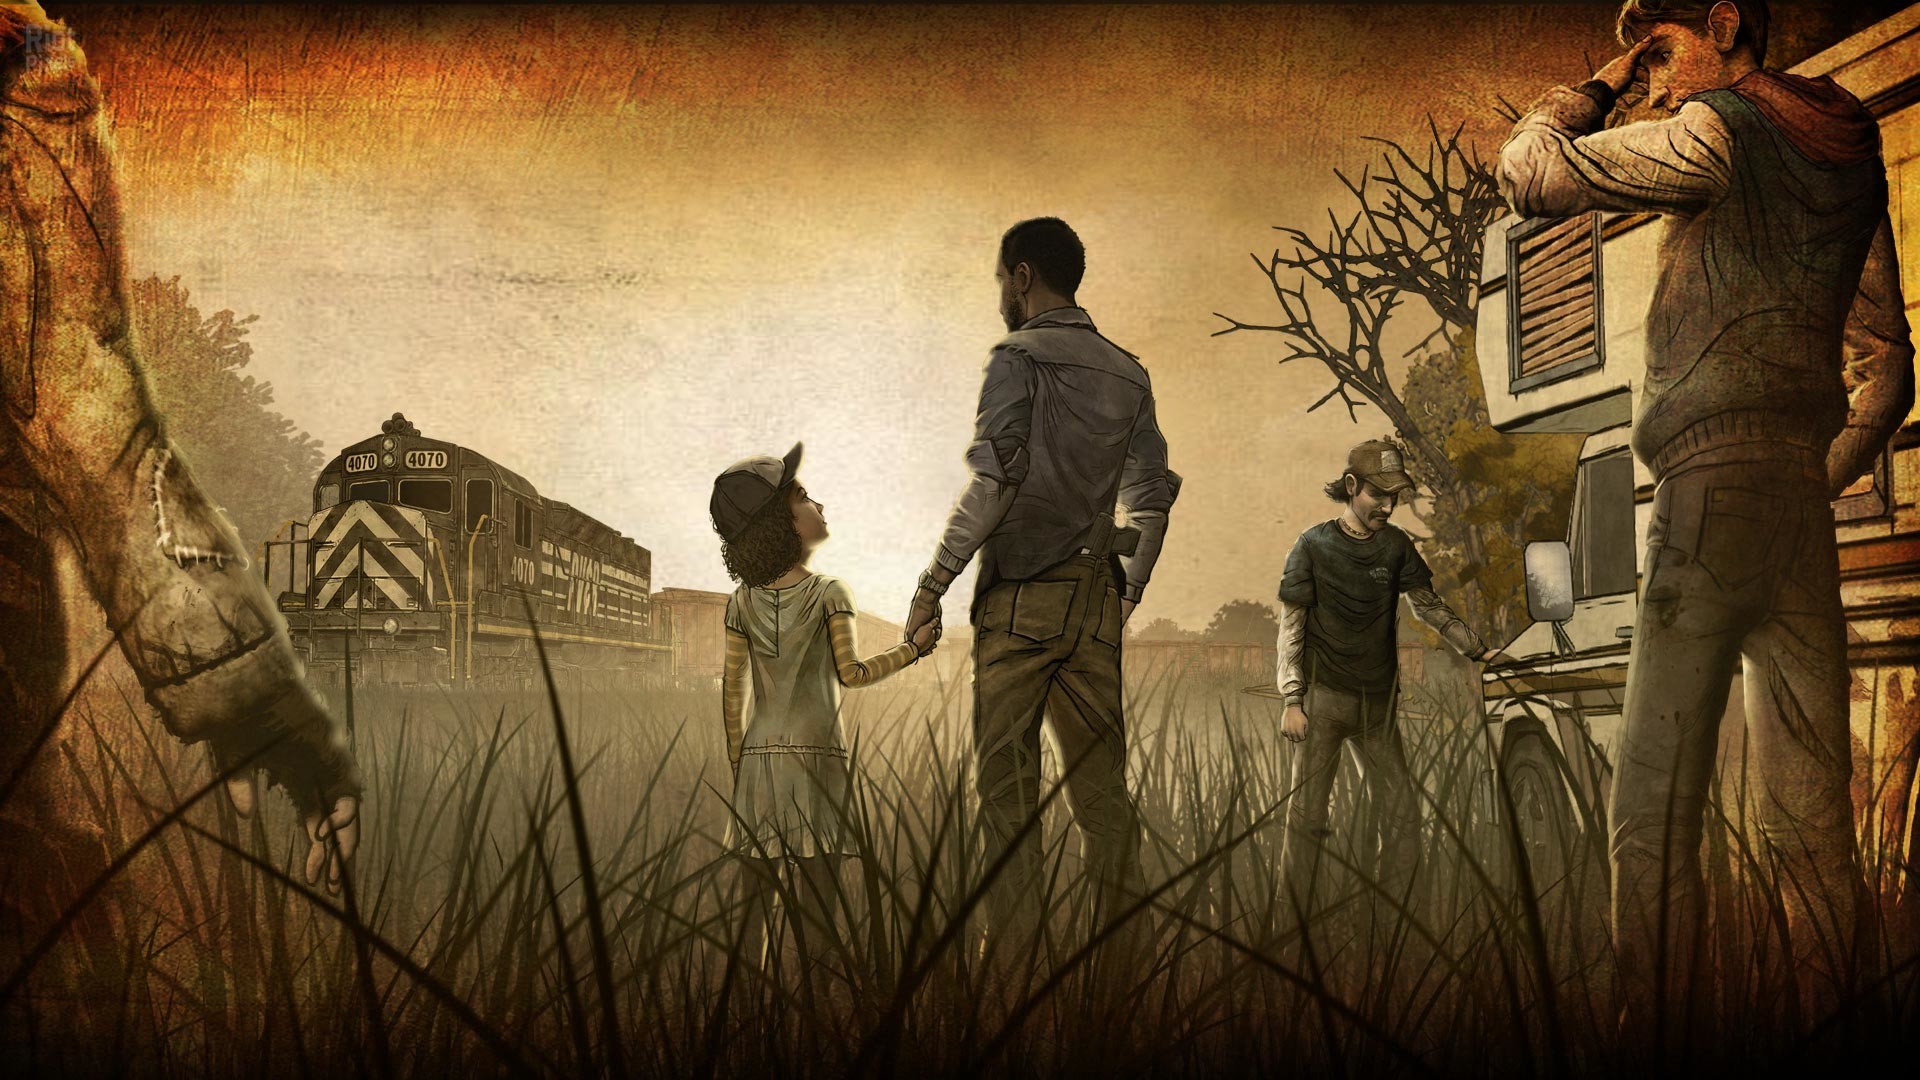 1920x1080 The Walking Dead Game Wallpaper